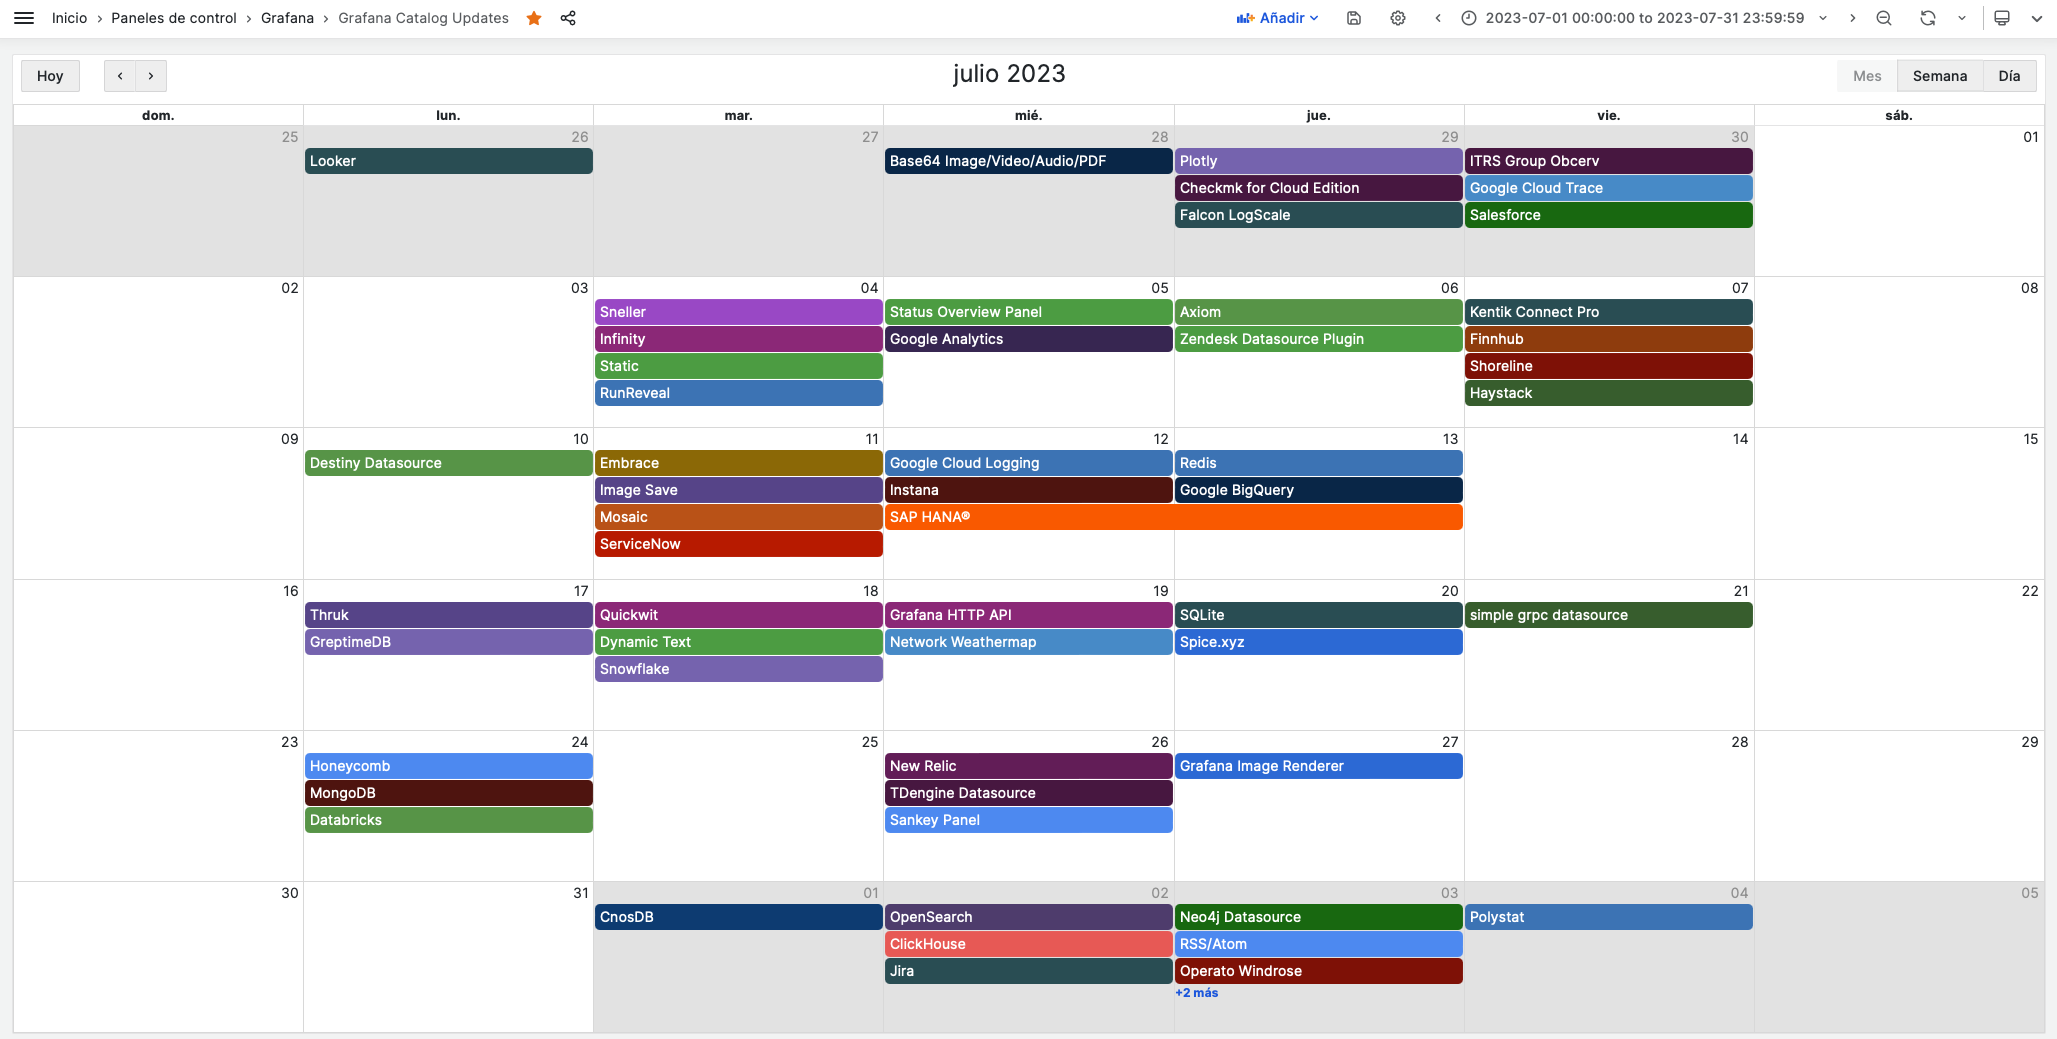 Big Calendar displays Grafana plugins updated in July 2023 .